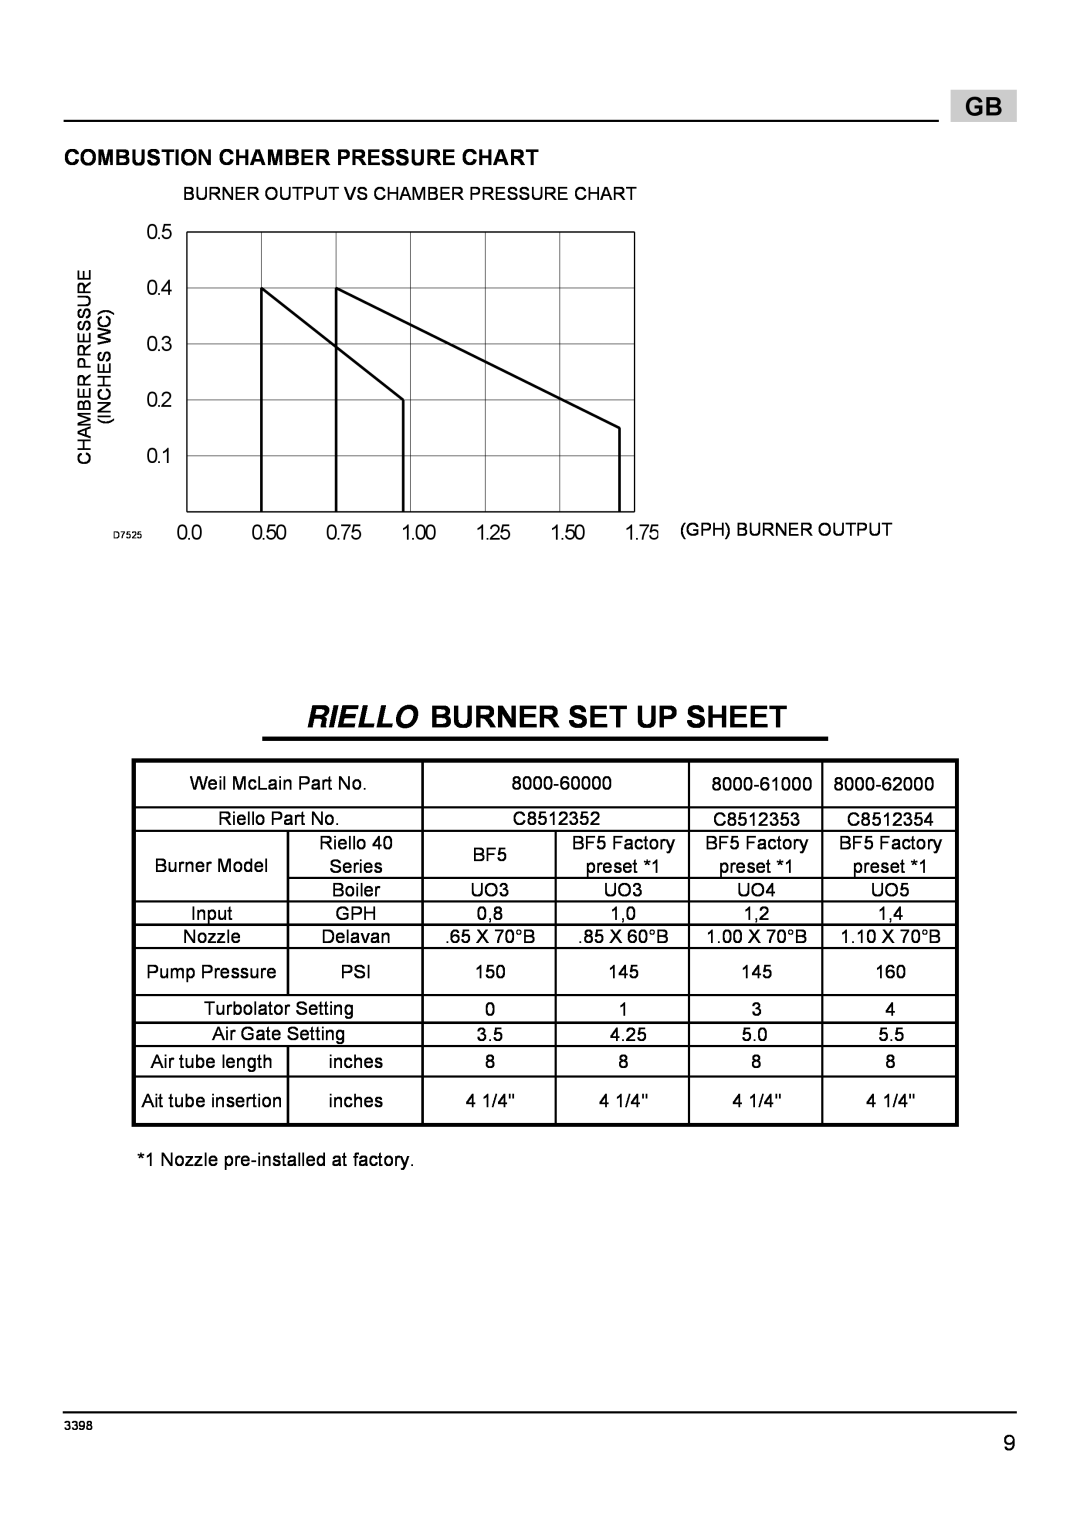 Weil-McLain 800062000-Brn-PO Rie BF5 manual Riello Burner Set Up Sheet, Combustion Chamber Pressure Chart 